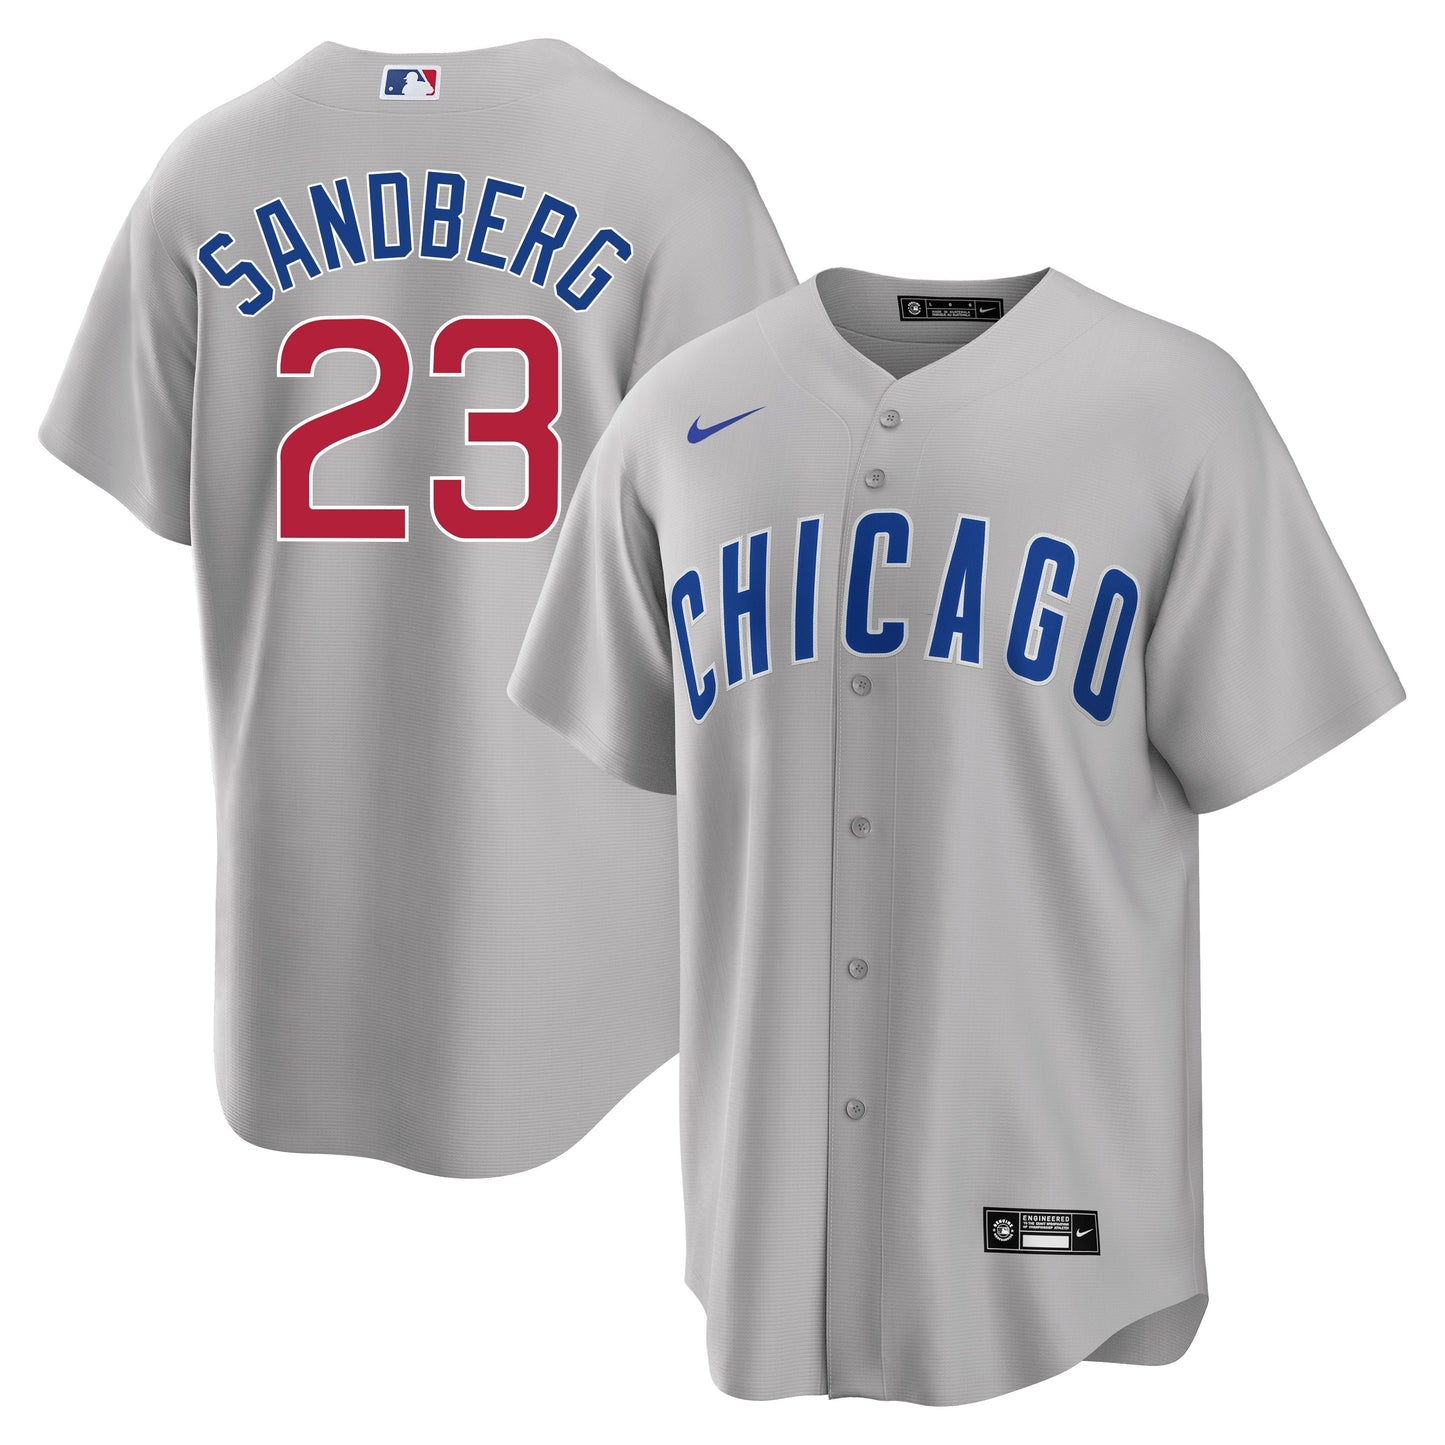 Ryne Sandberg Chicago Cubs Road Gray Men's Replica Jersey